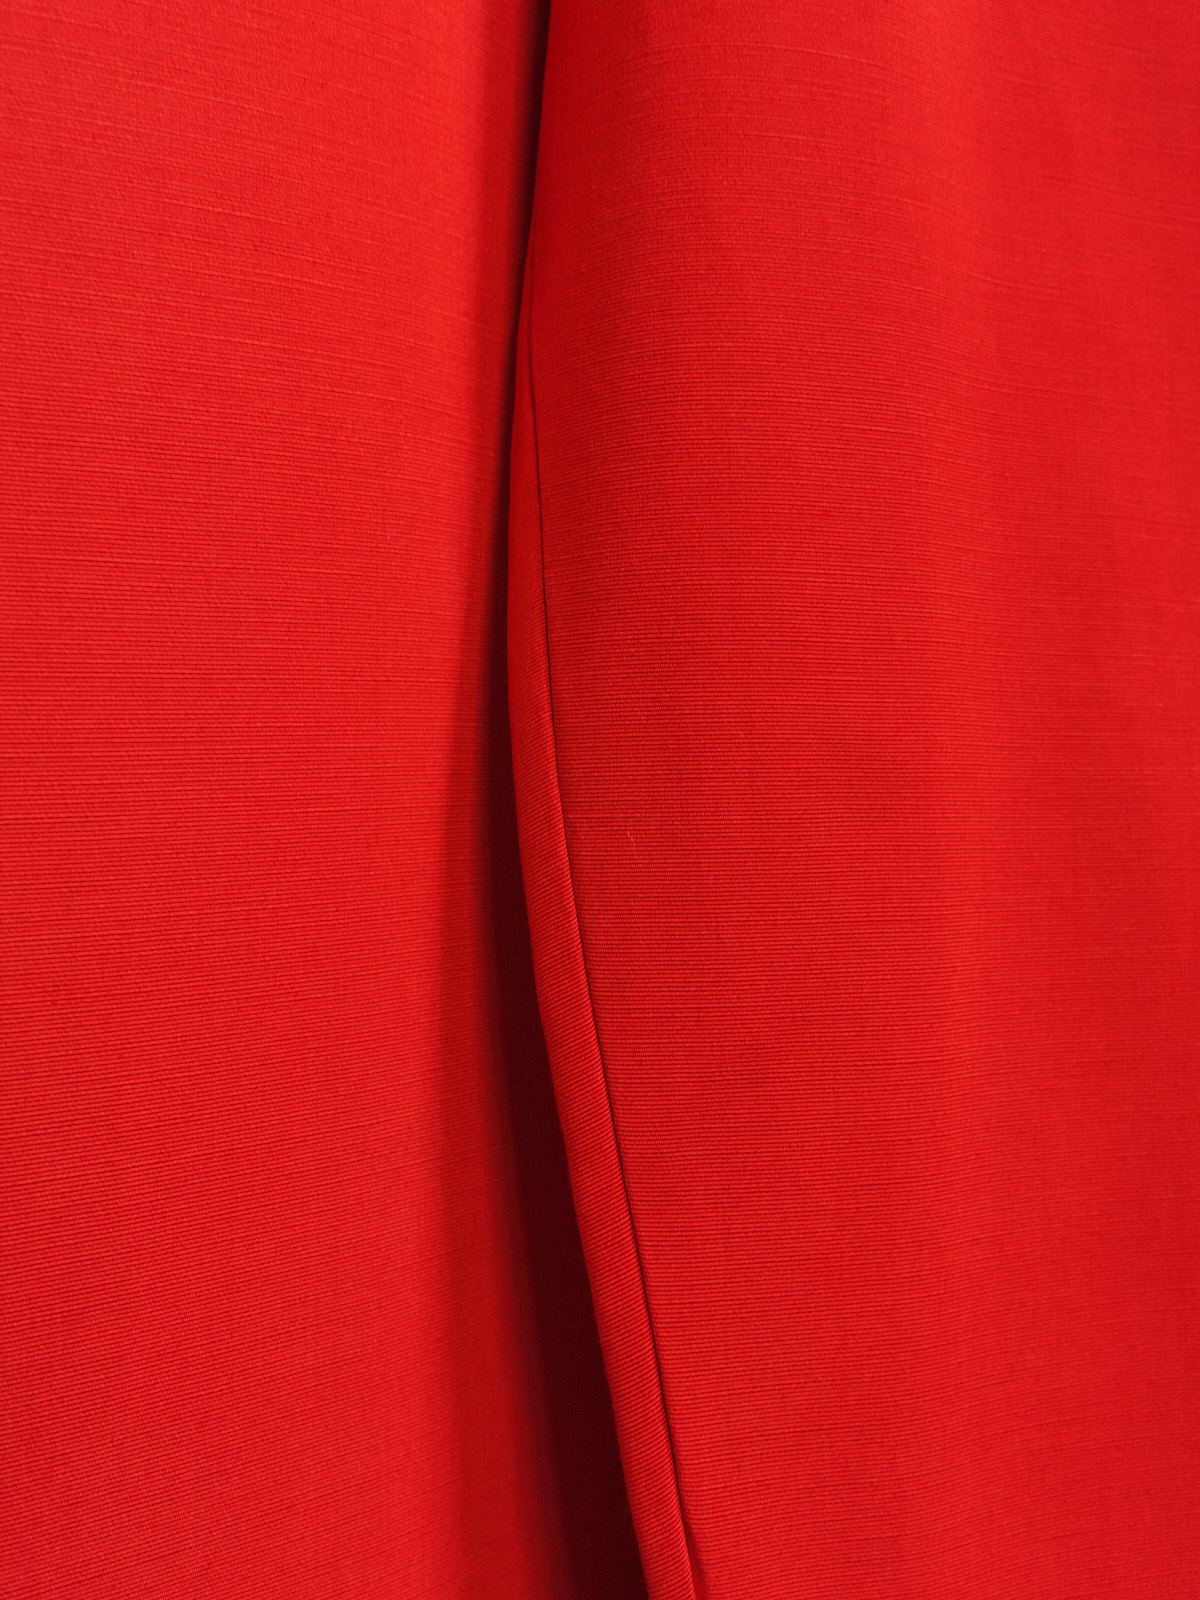 Jasper Conran 1980s red grosgrain tapered balloon trousers - womens 10 8